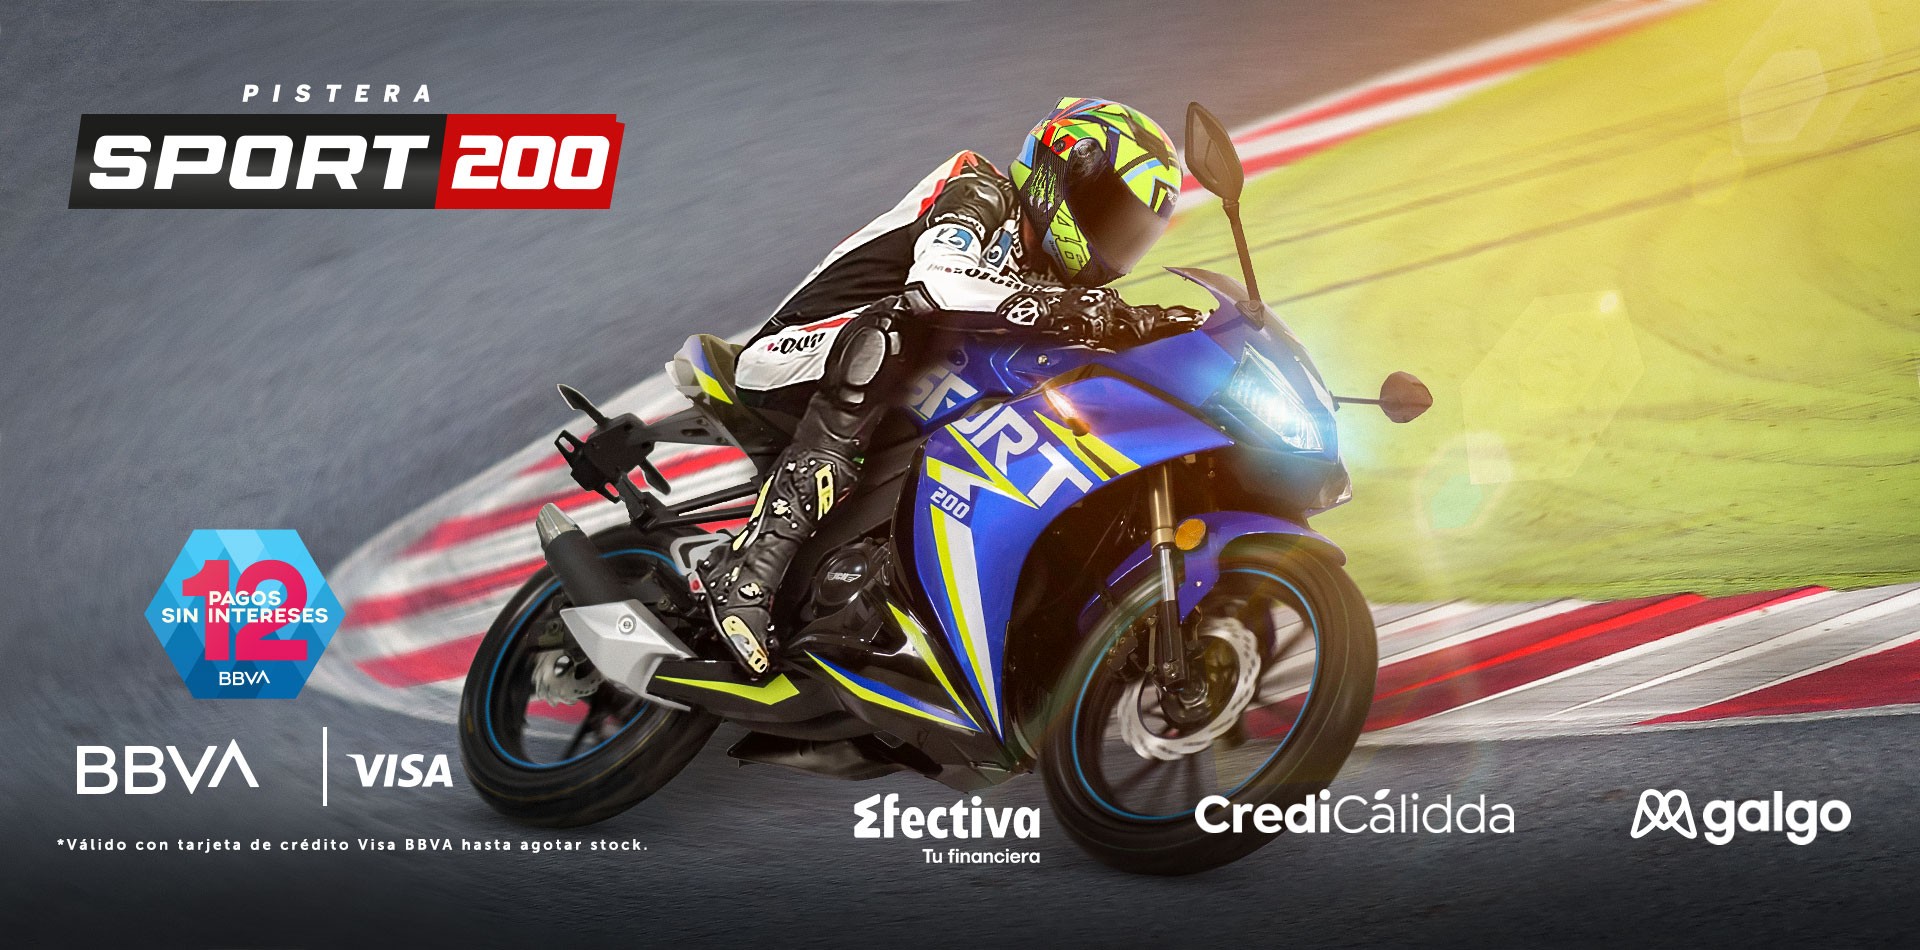 Moto Pistera Sport 200